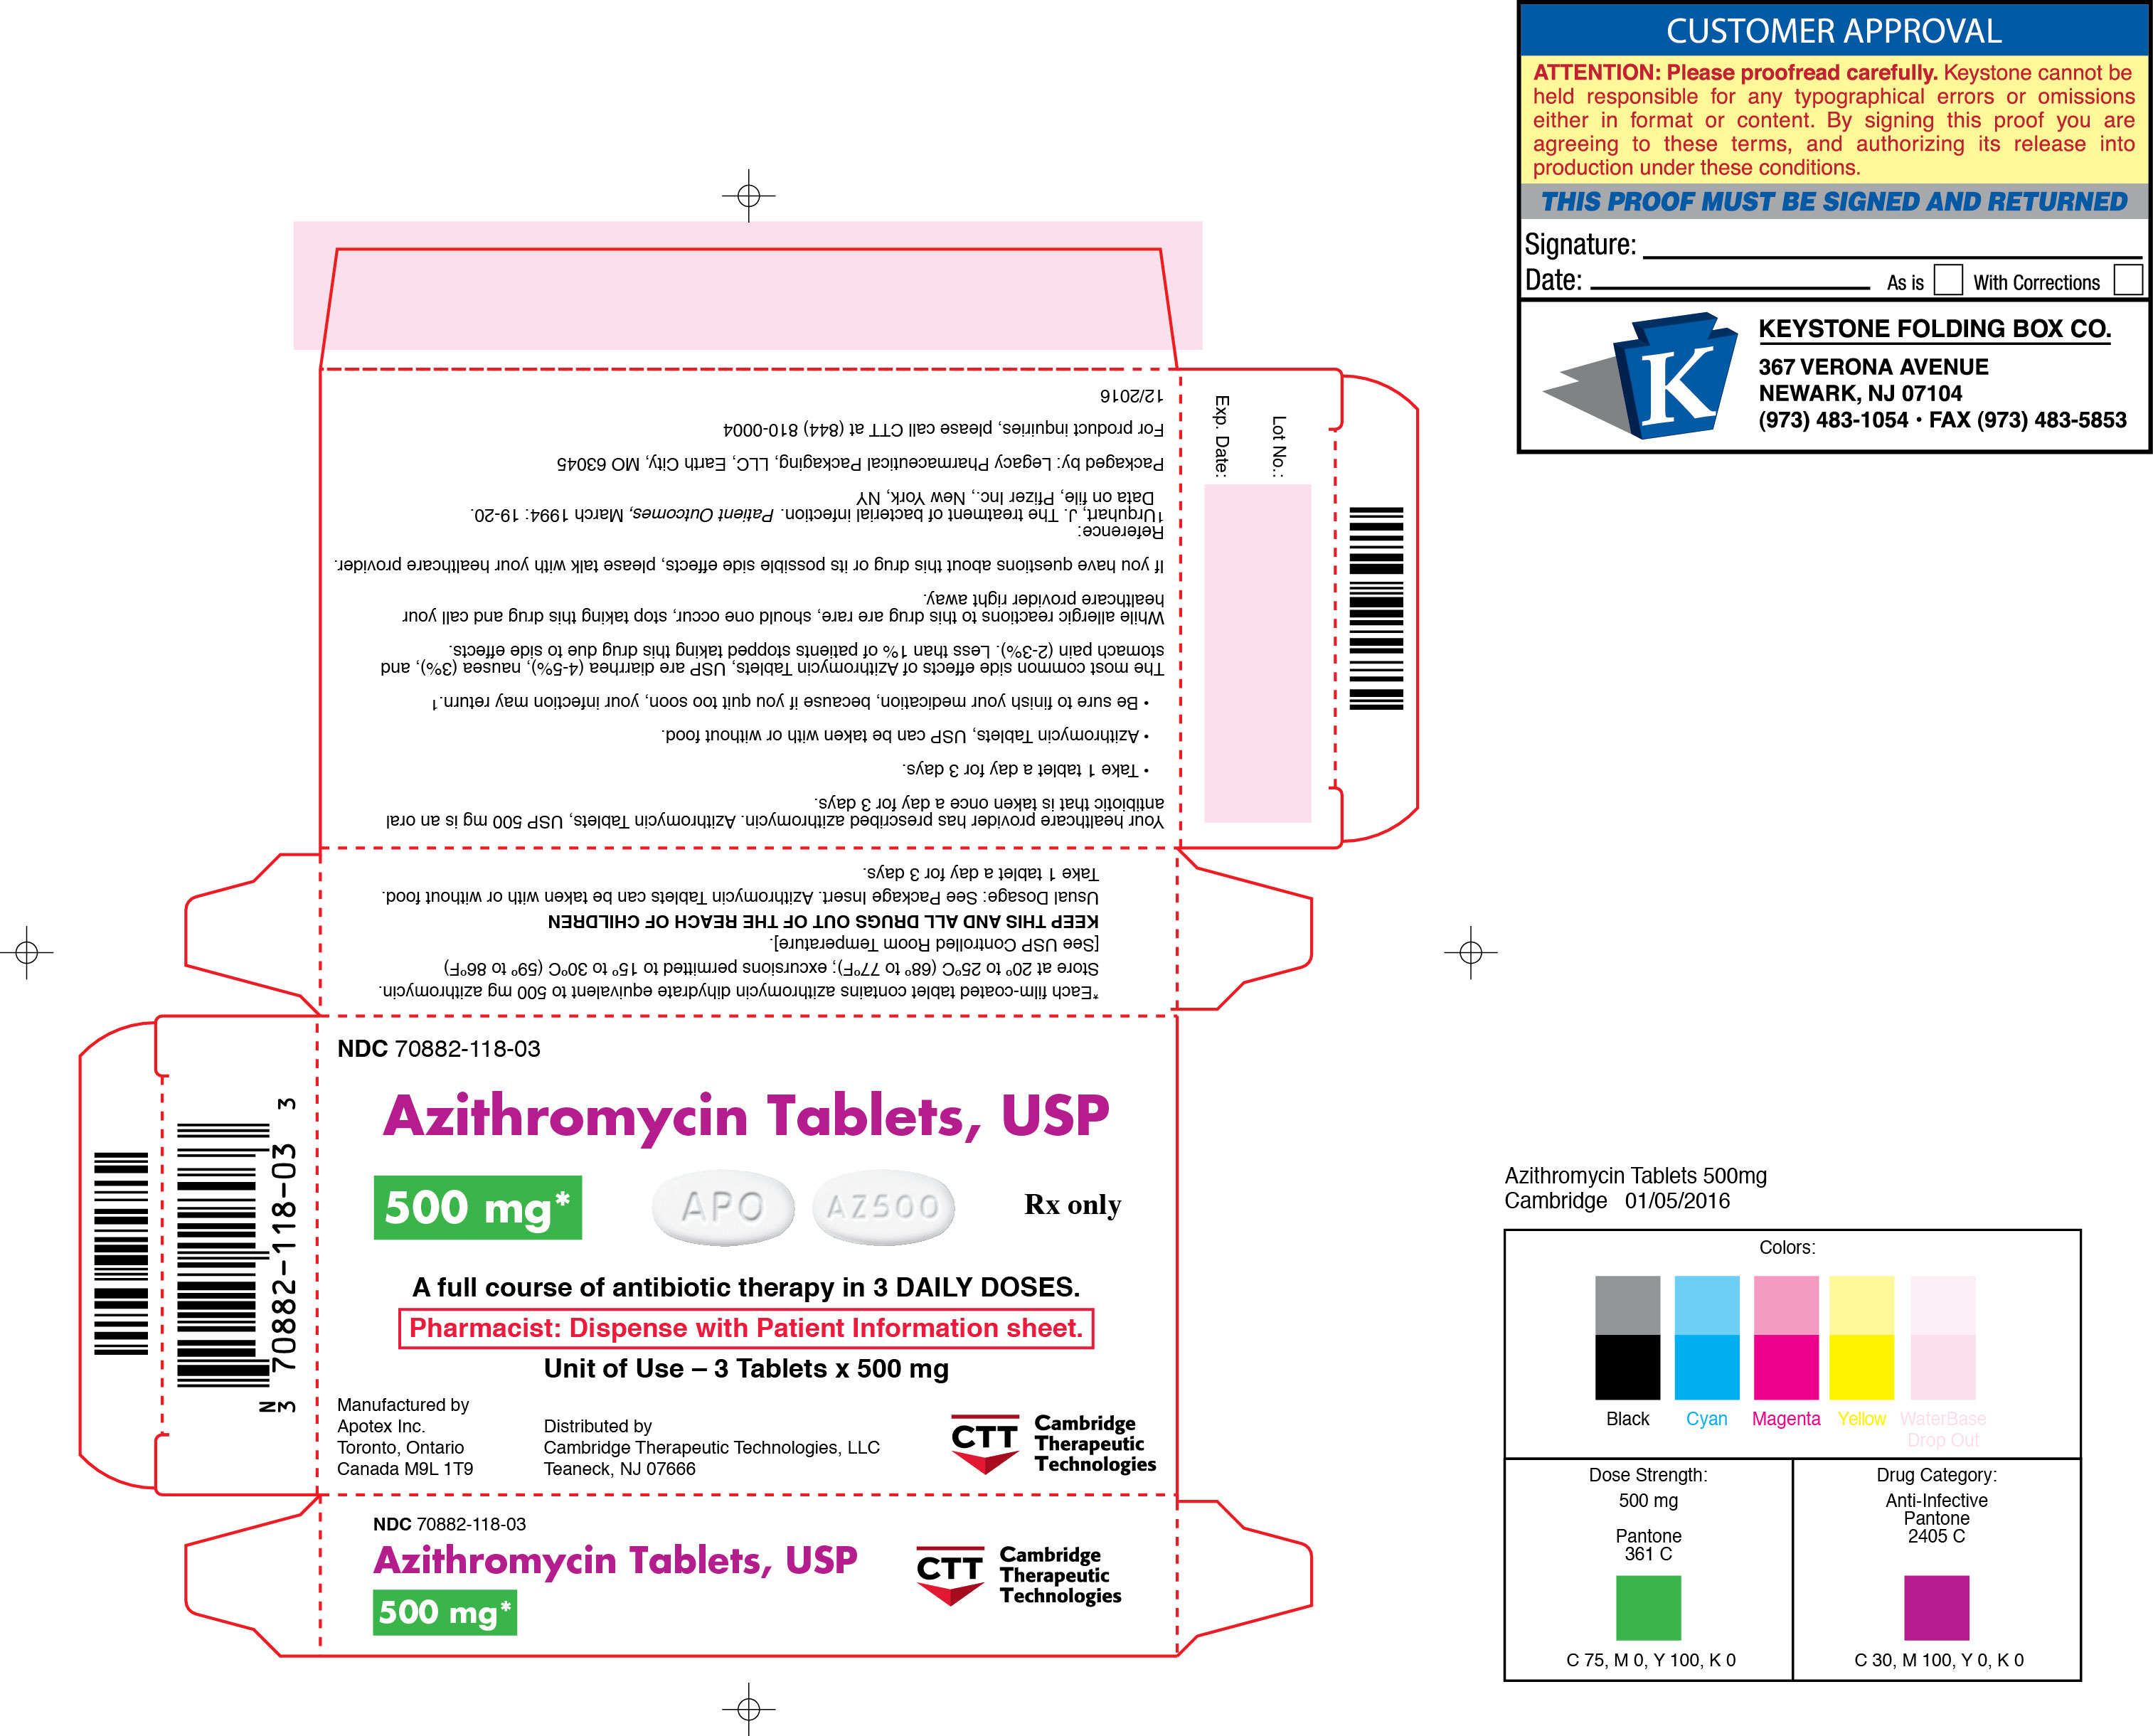 Azithromycin Tablets, USP 500 mg